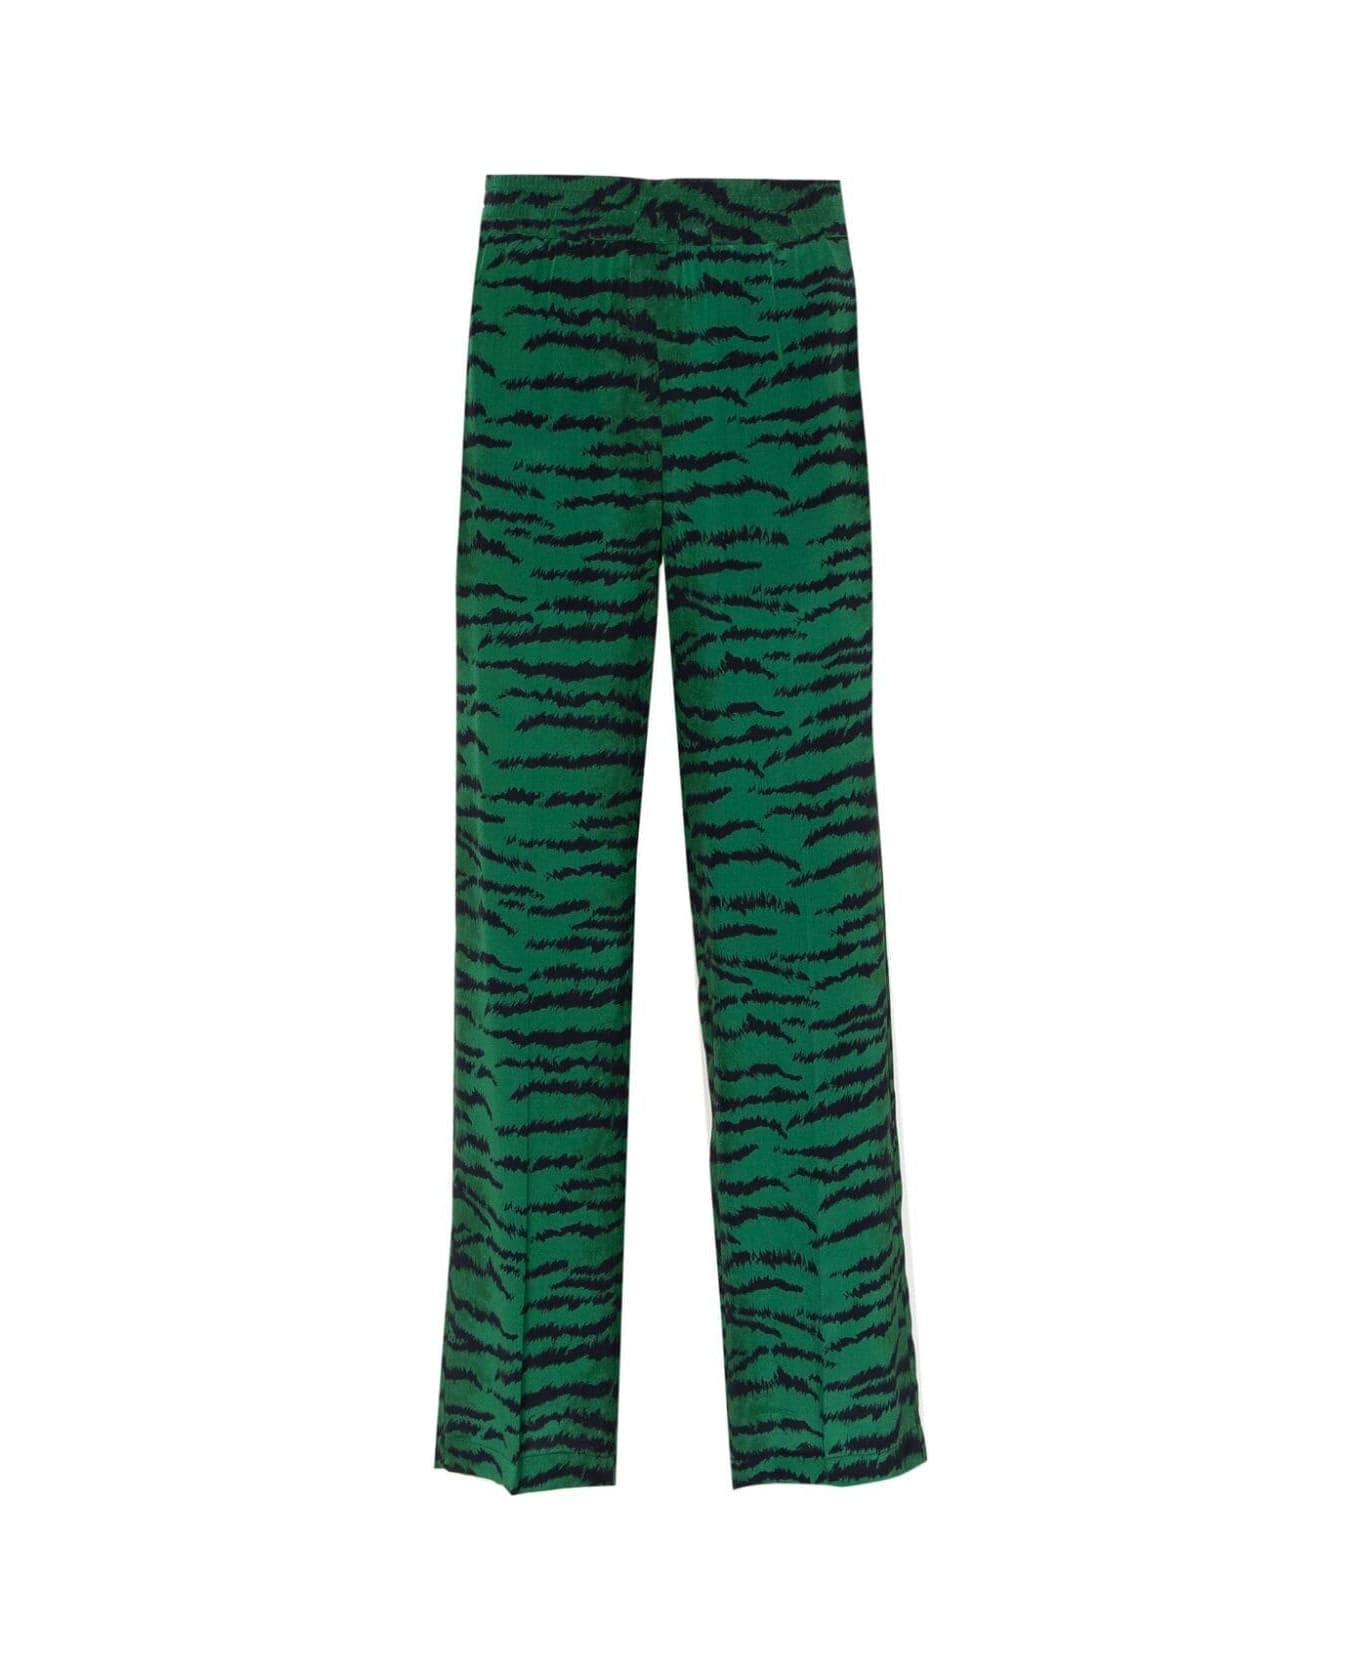 Victoria Beckham Pijama Pants - Green Navy